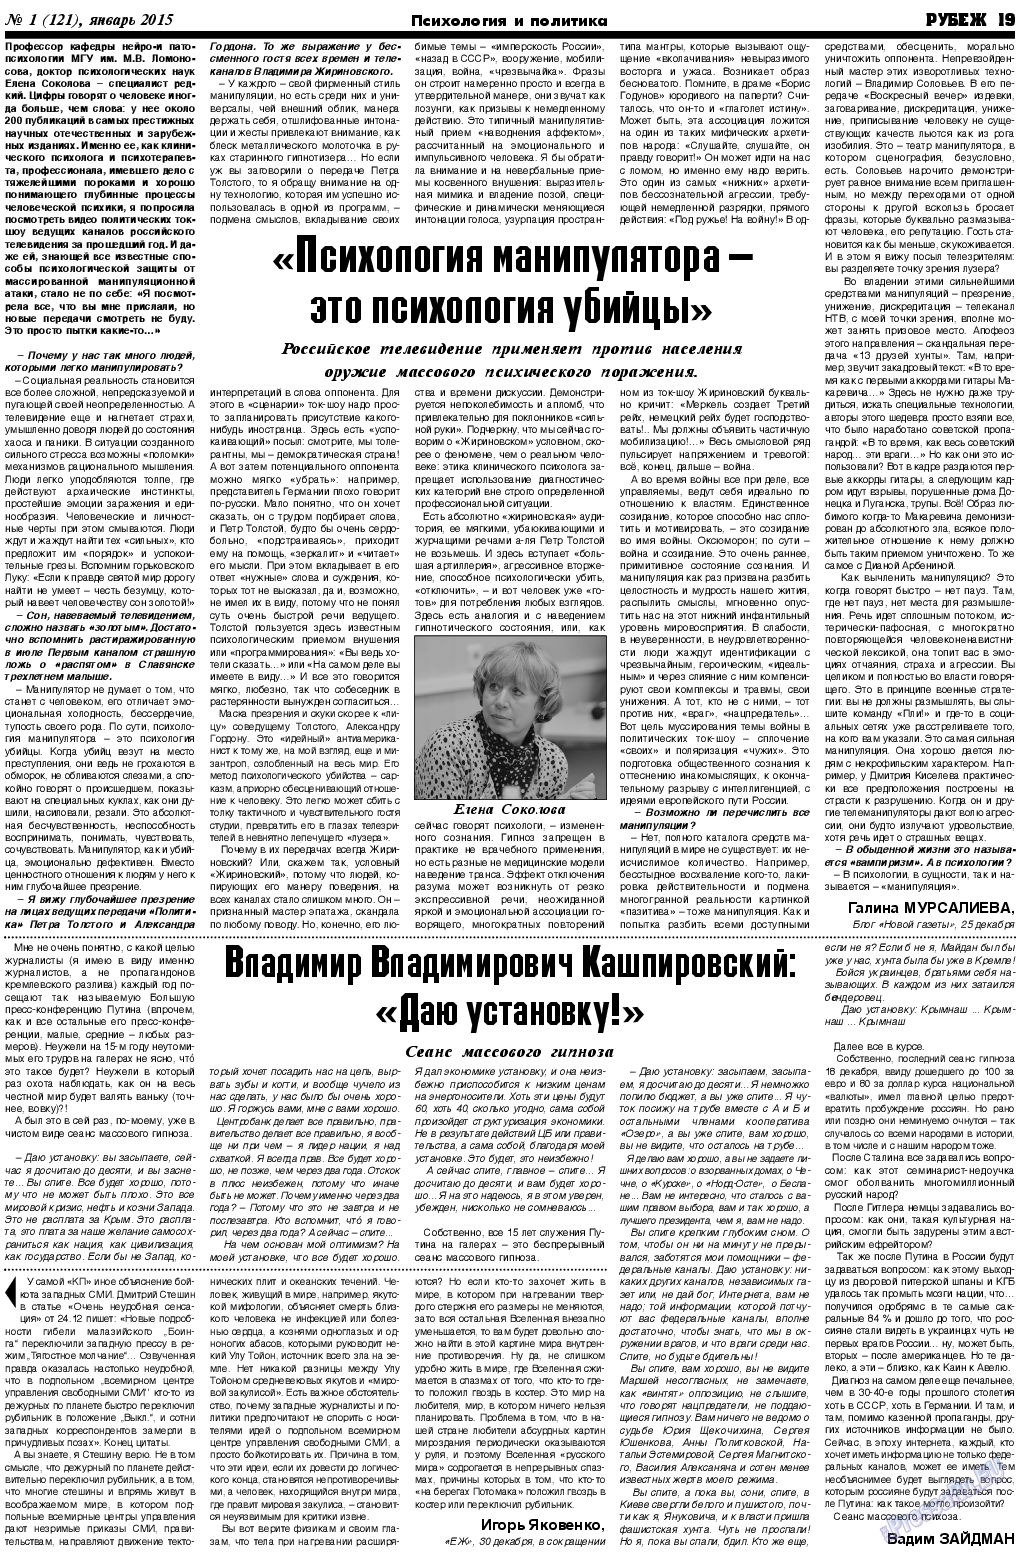 Рубеж, газета. 2015 №1 стр.19